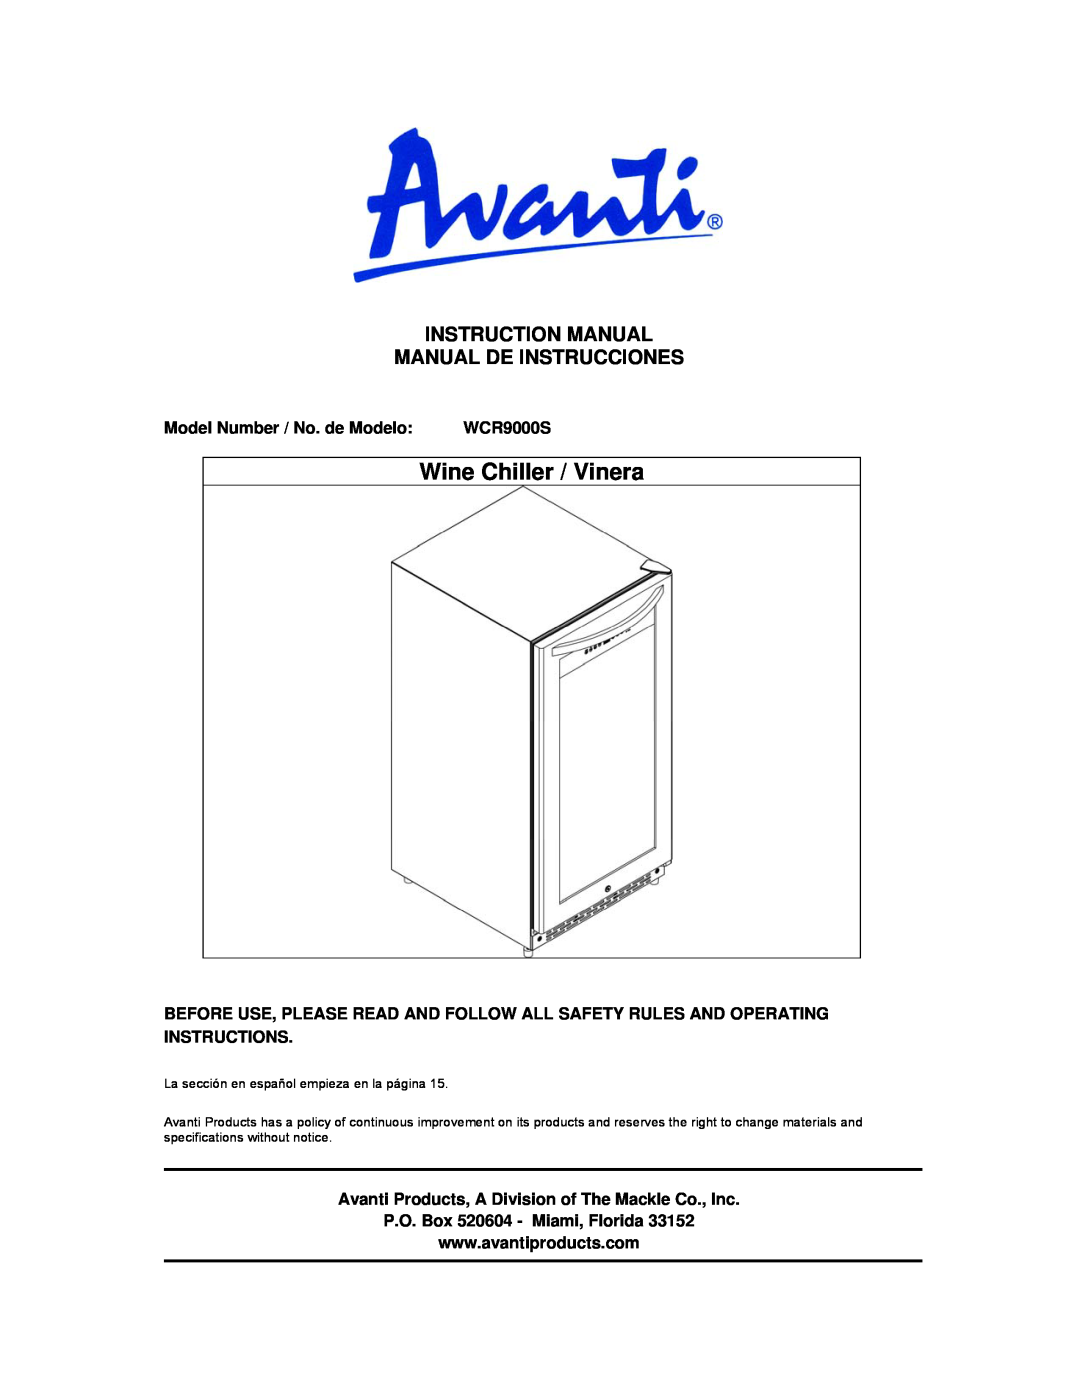 Avanti WCR9000S instruction manual Model Number / No. de Modelo, Avanti Products, A Division of The Mackle Co., Inc 